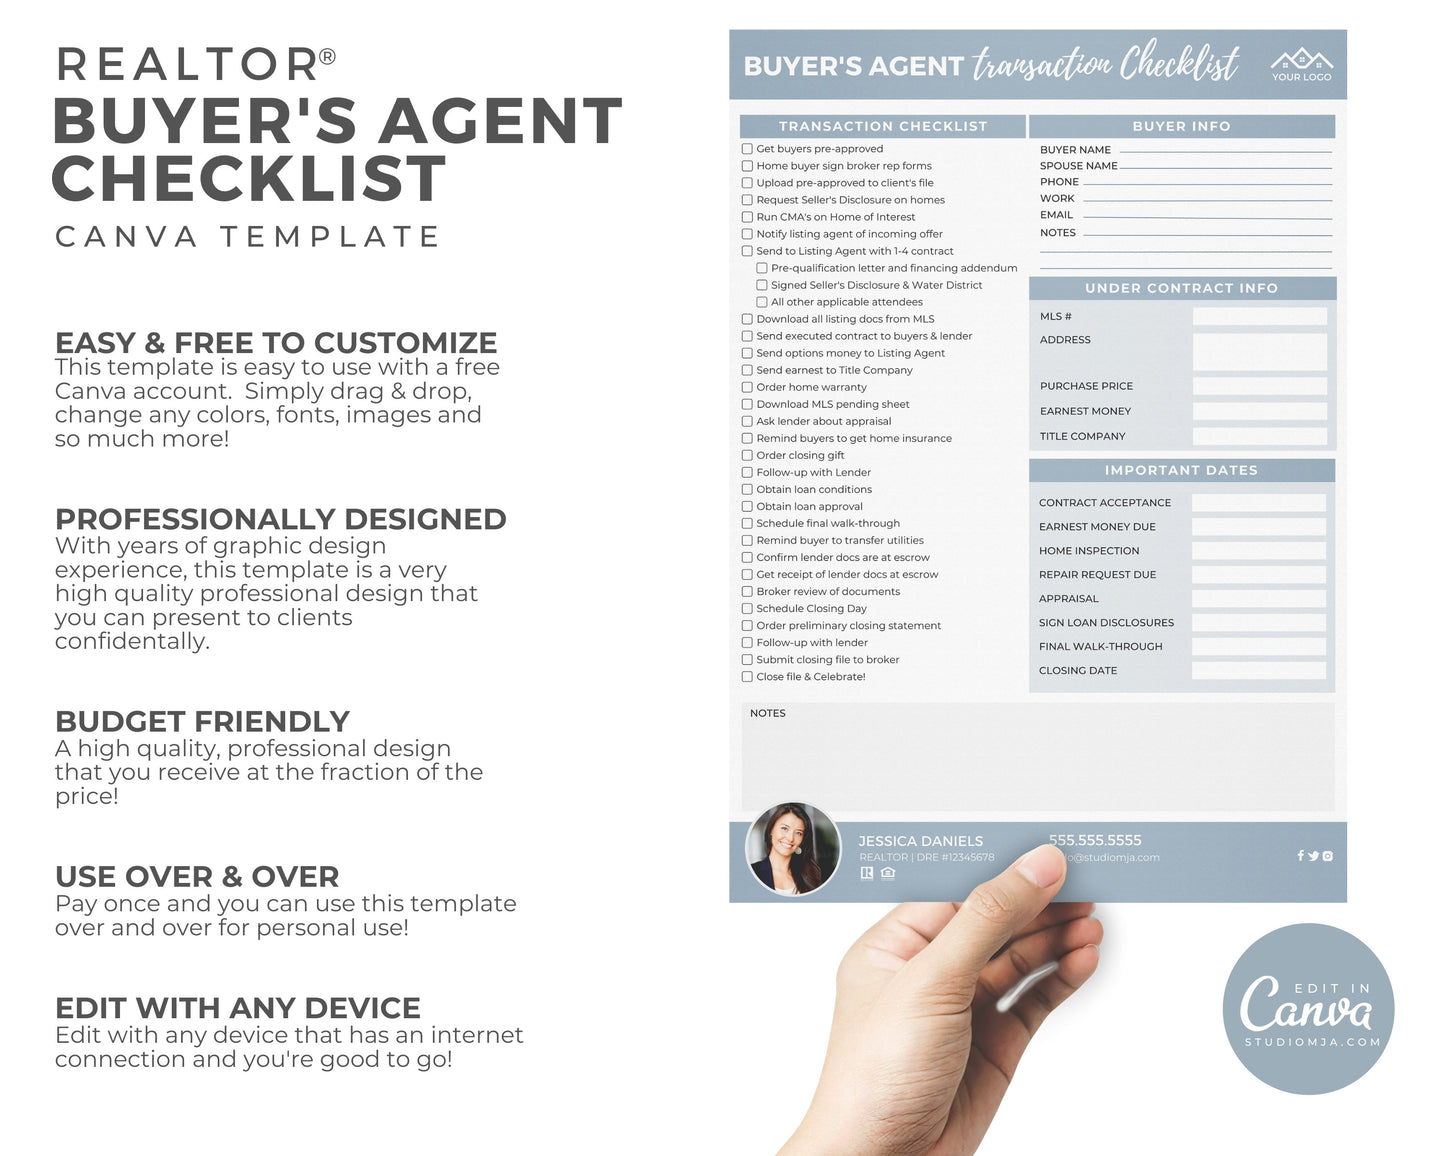 Real Estate Buyer Agent Transaction Checklist